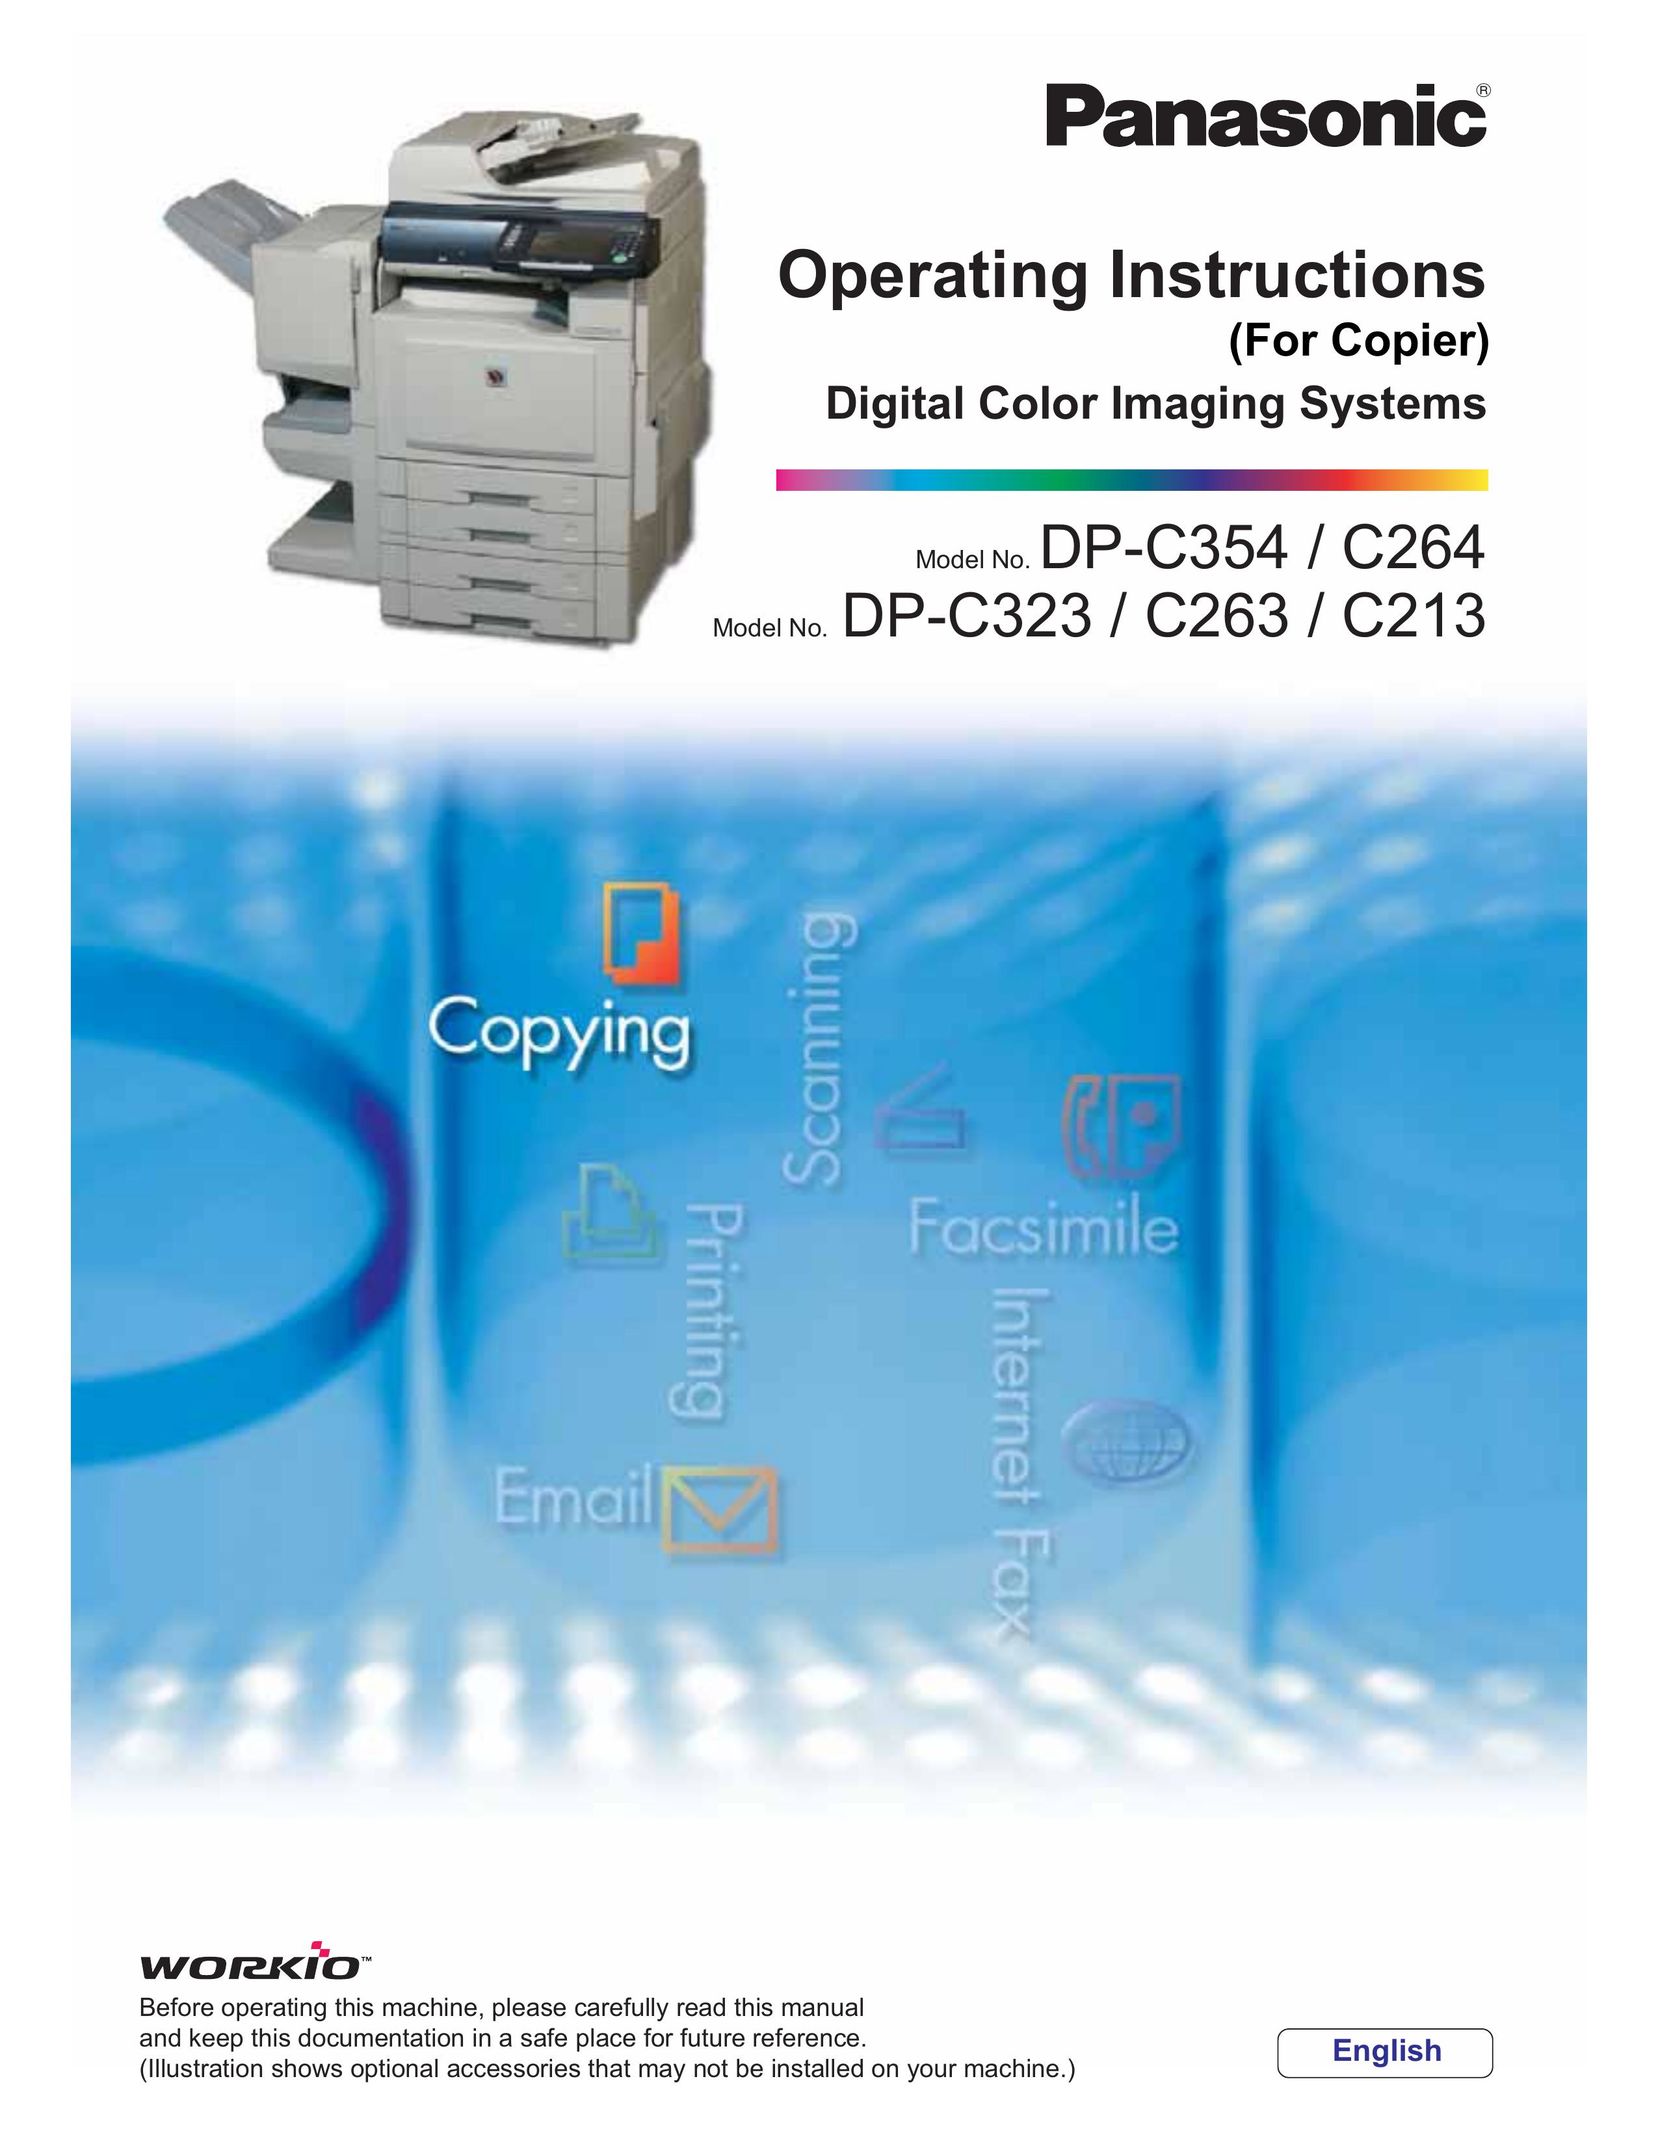 Panasonic C213 Copier User Manual